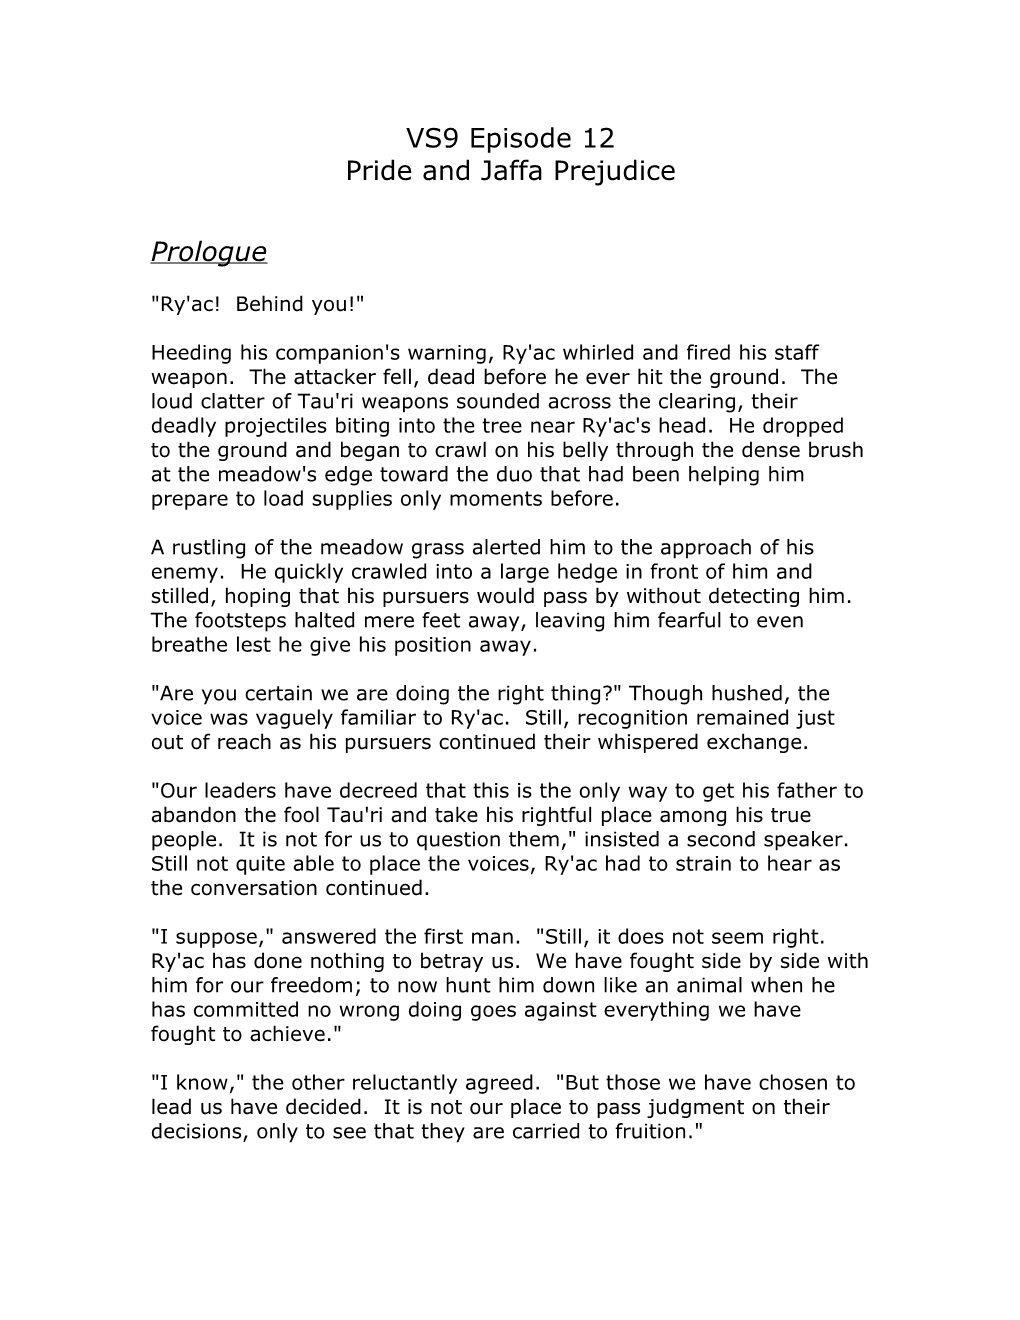 Pride and Jaffa Prejudice